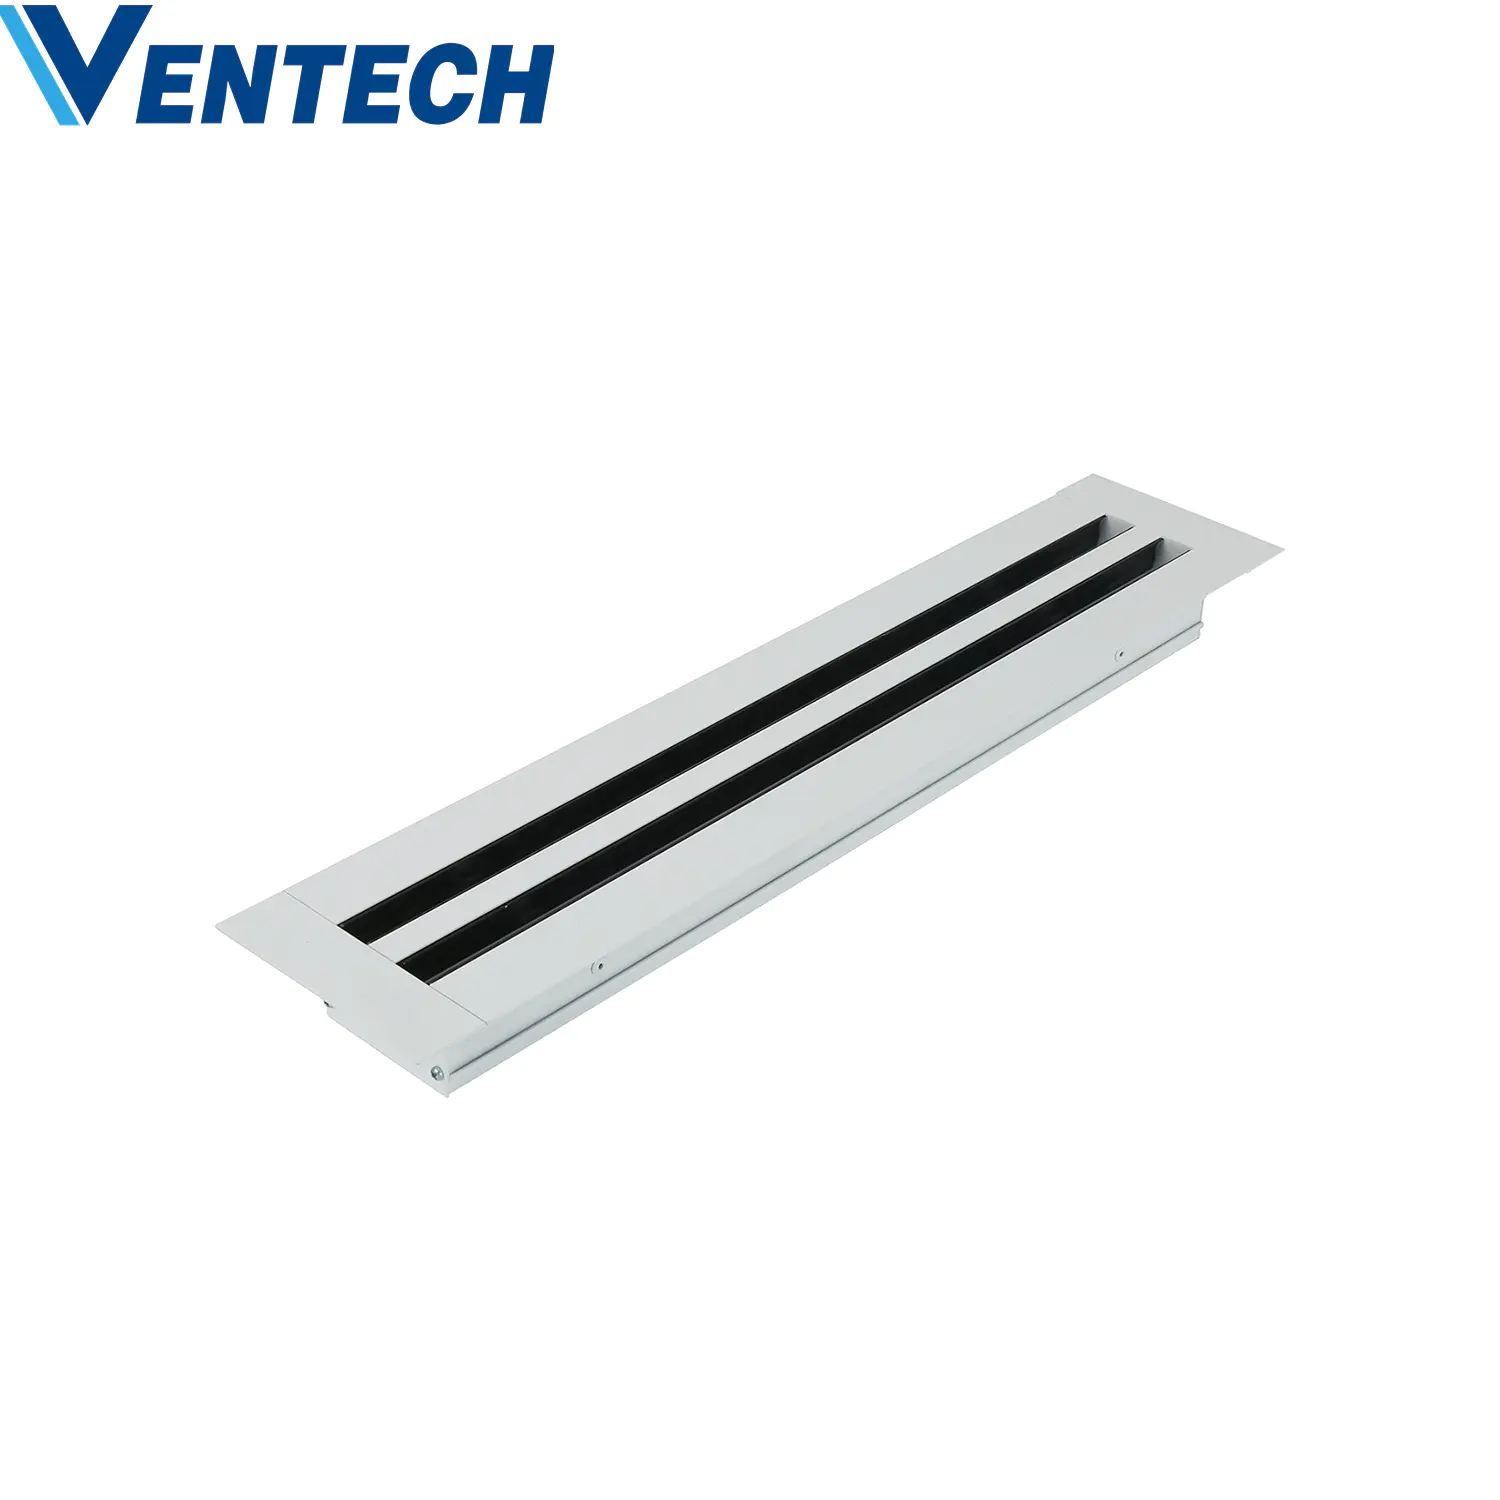 Hvac  Exhaust Ceiling Air Ventilation Conditioning Aluminum Supply Linear Slot VAV Diffuser Price With Plenum Box